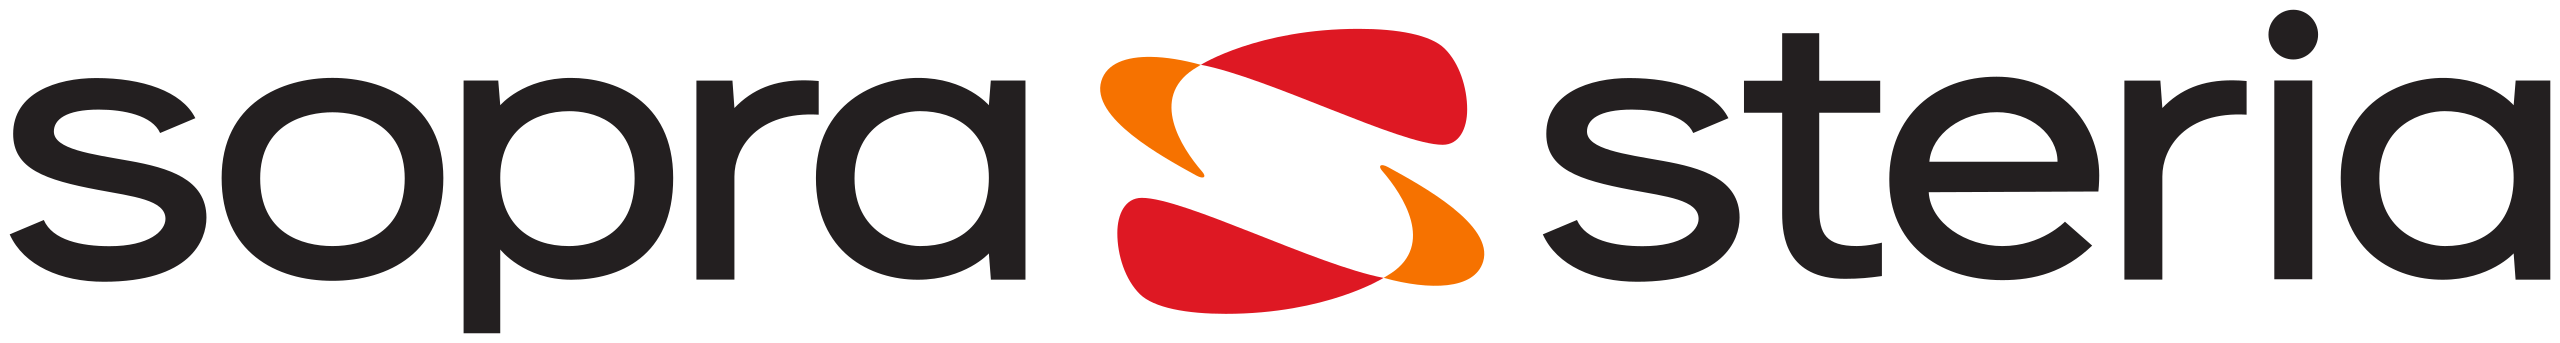 Sopra_Steria_logo.svg